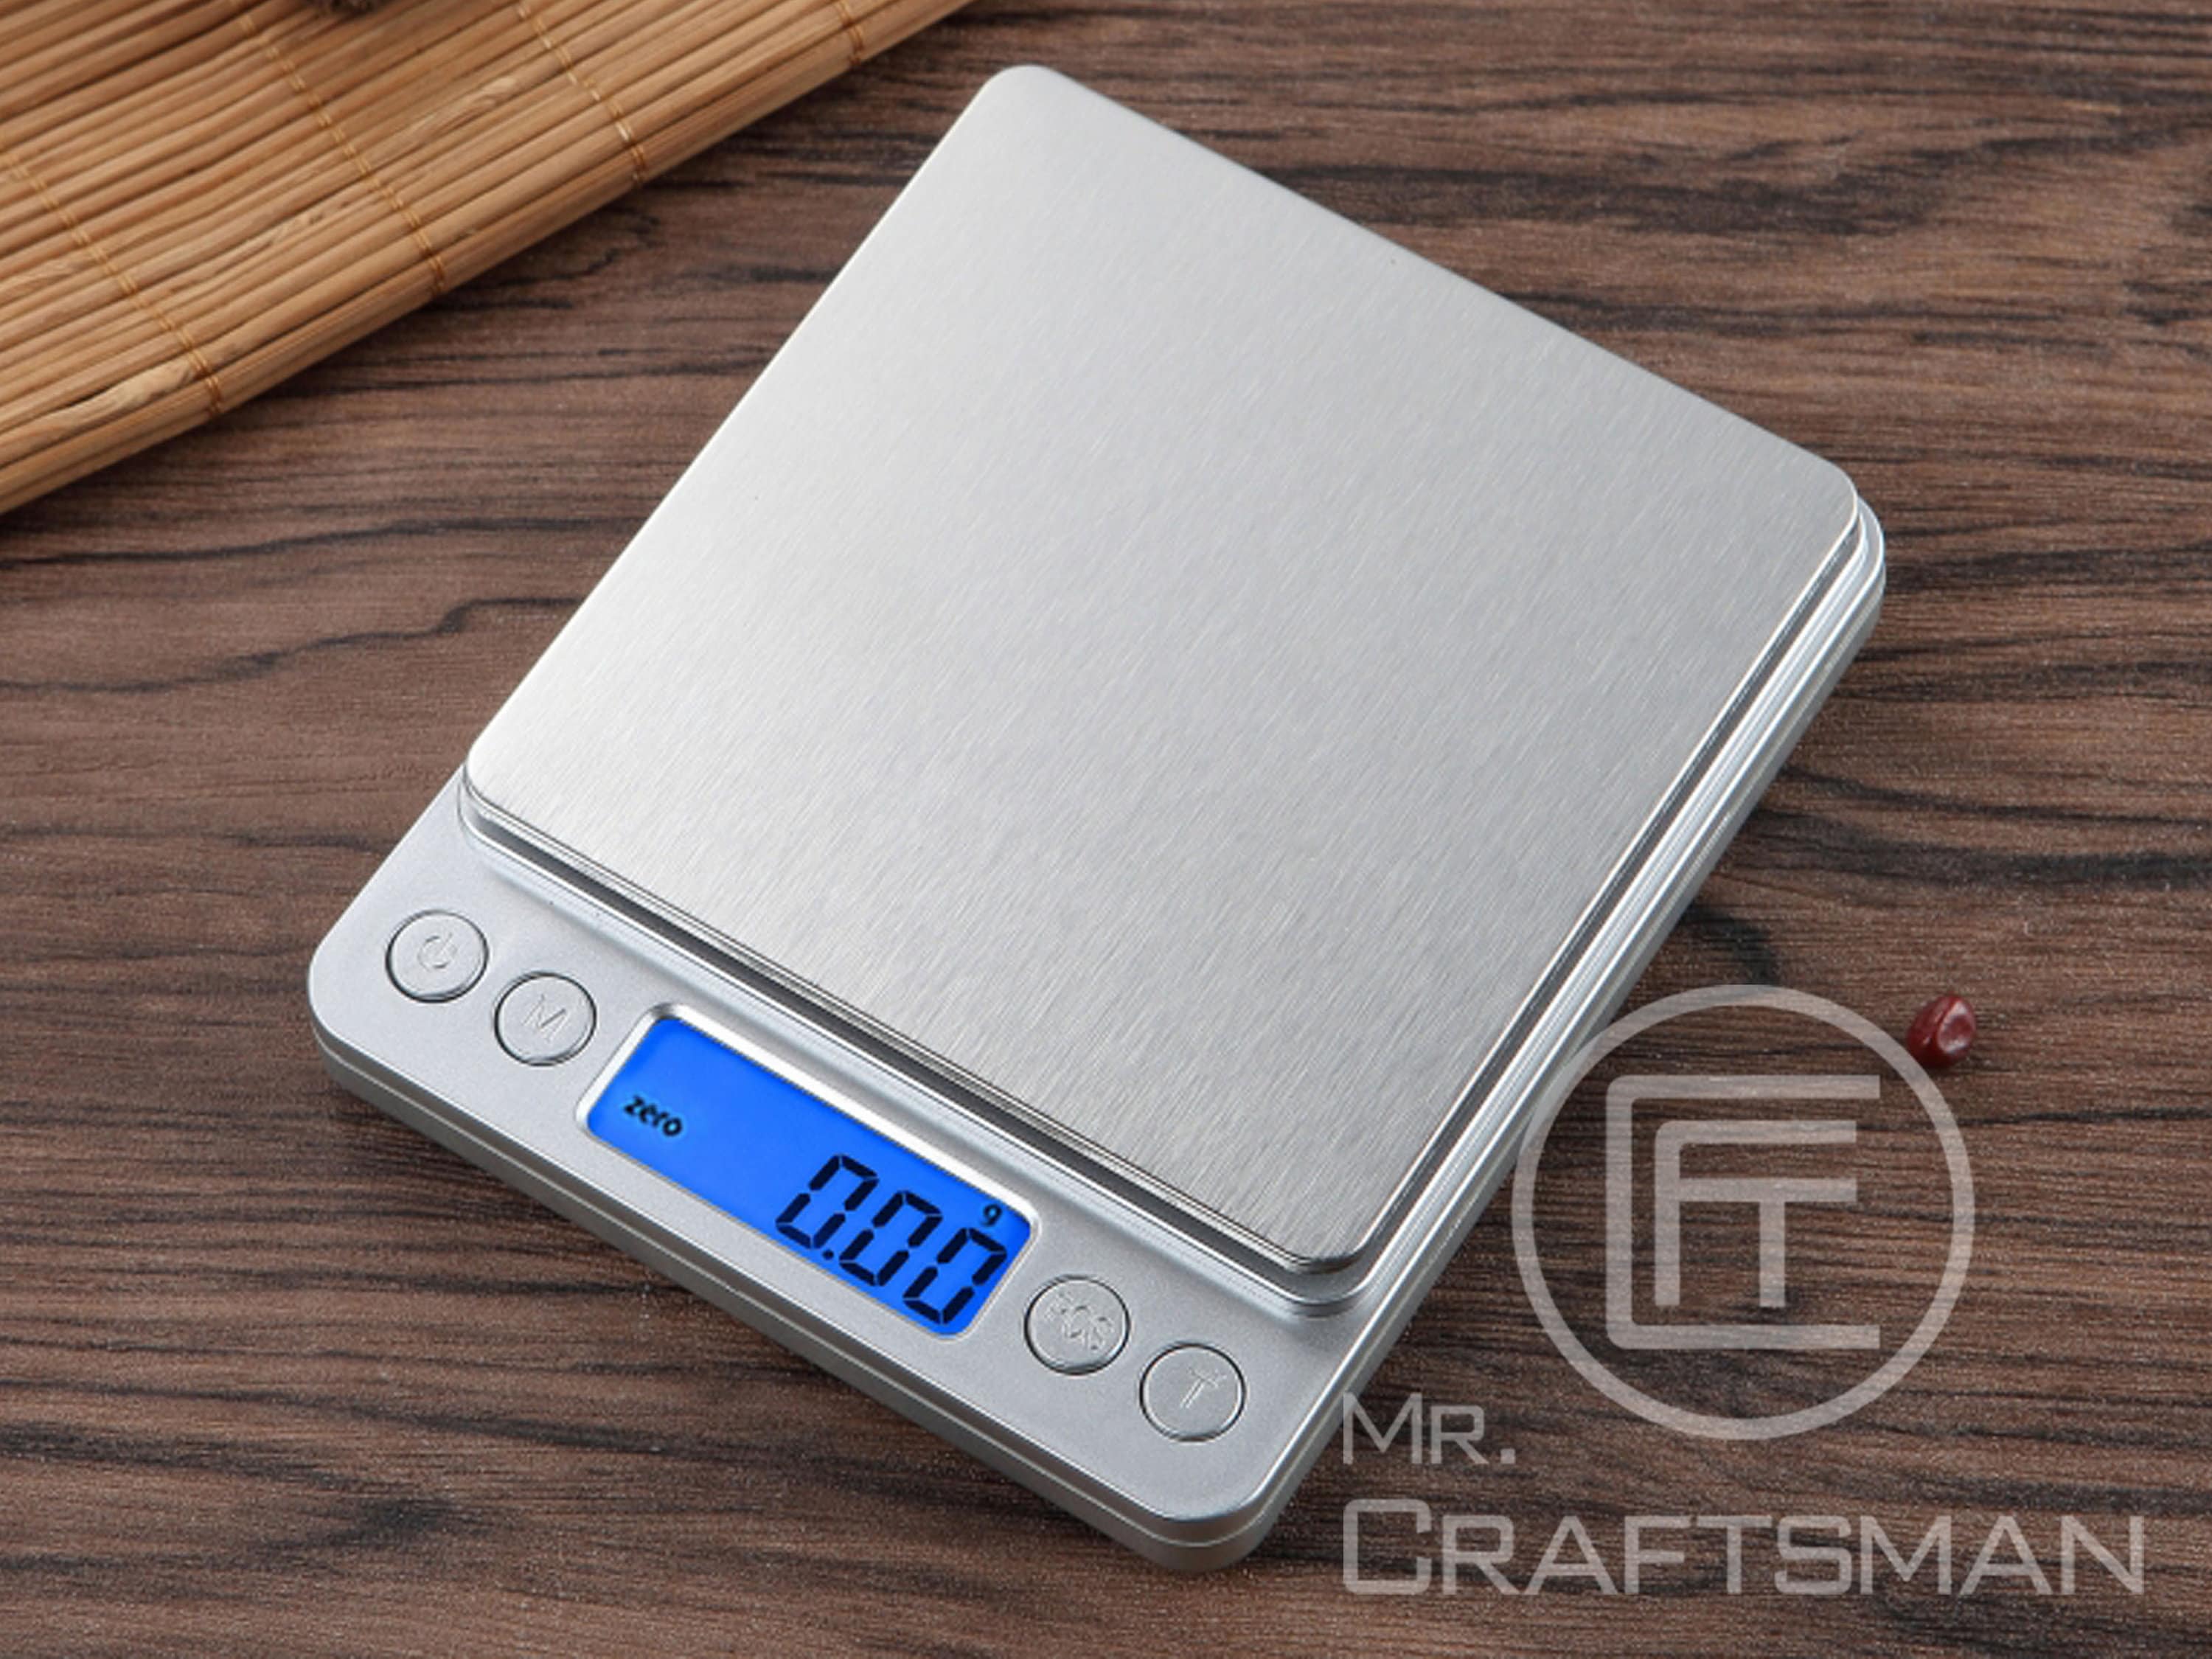 Starfrit High Precision Pocket Scale, 500-g